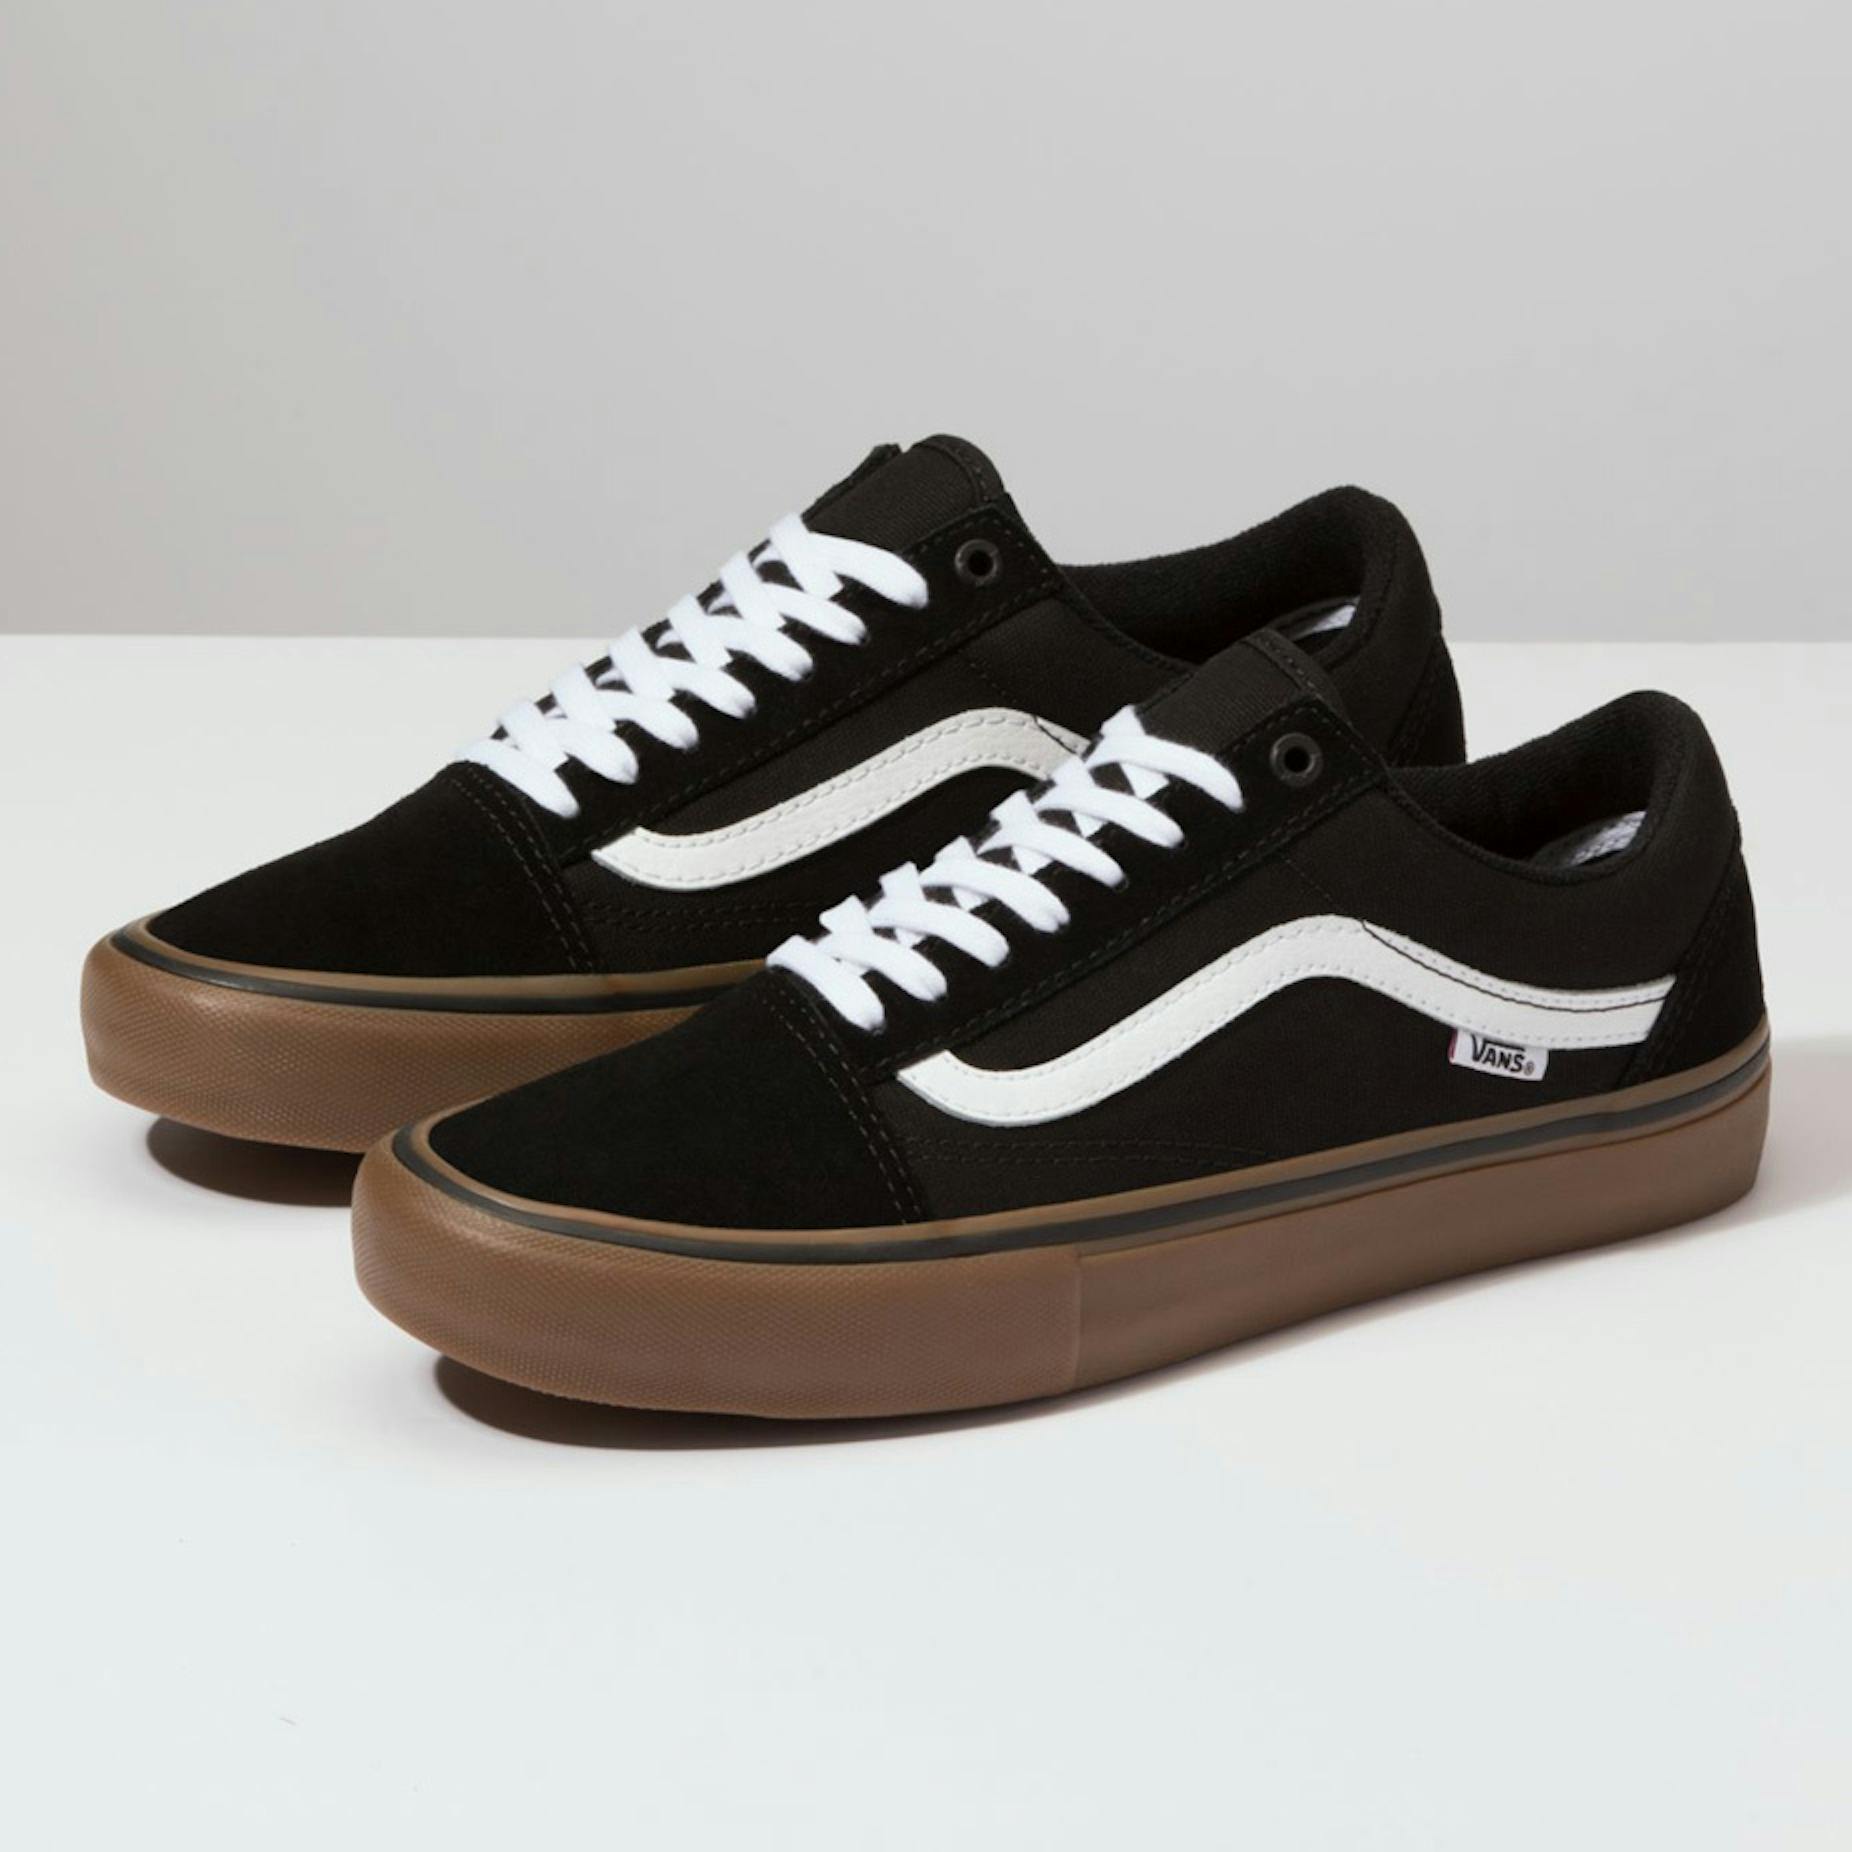 Old Skool Pro Shoe - Black/White/Medium Gum | Store